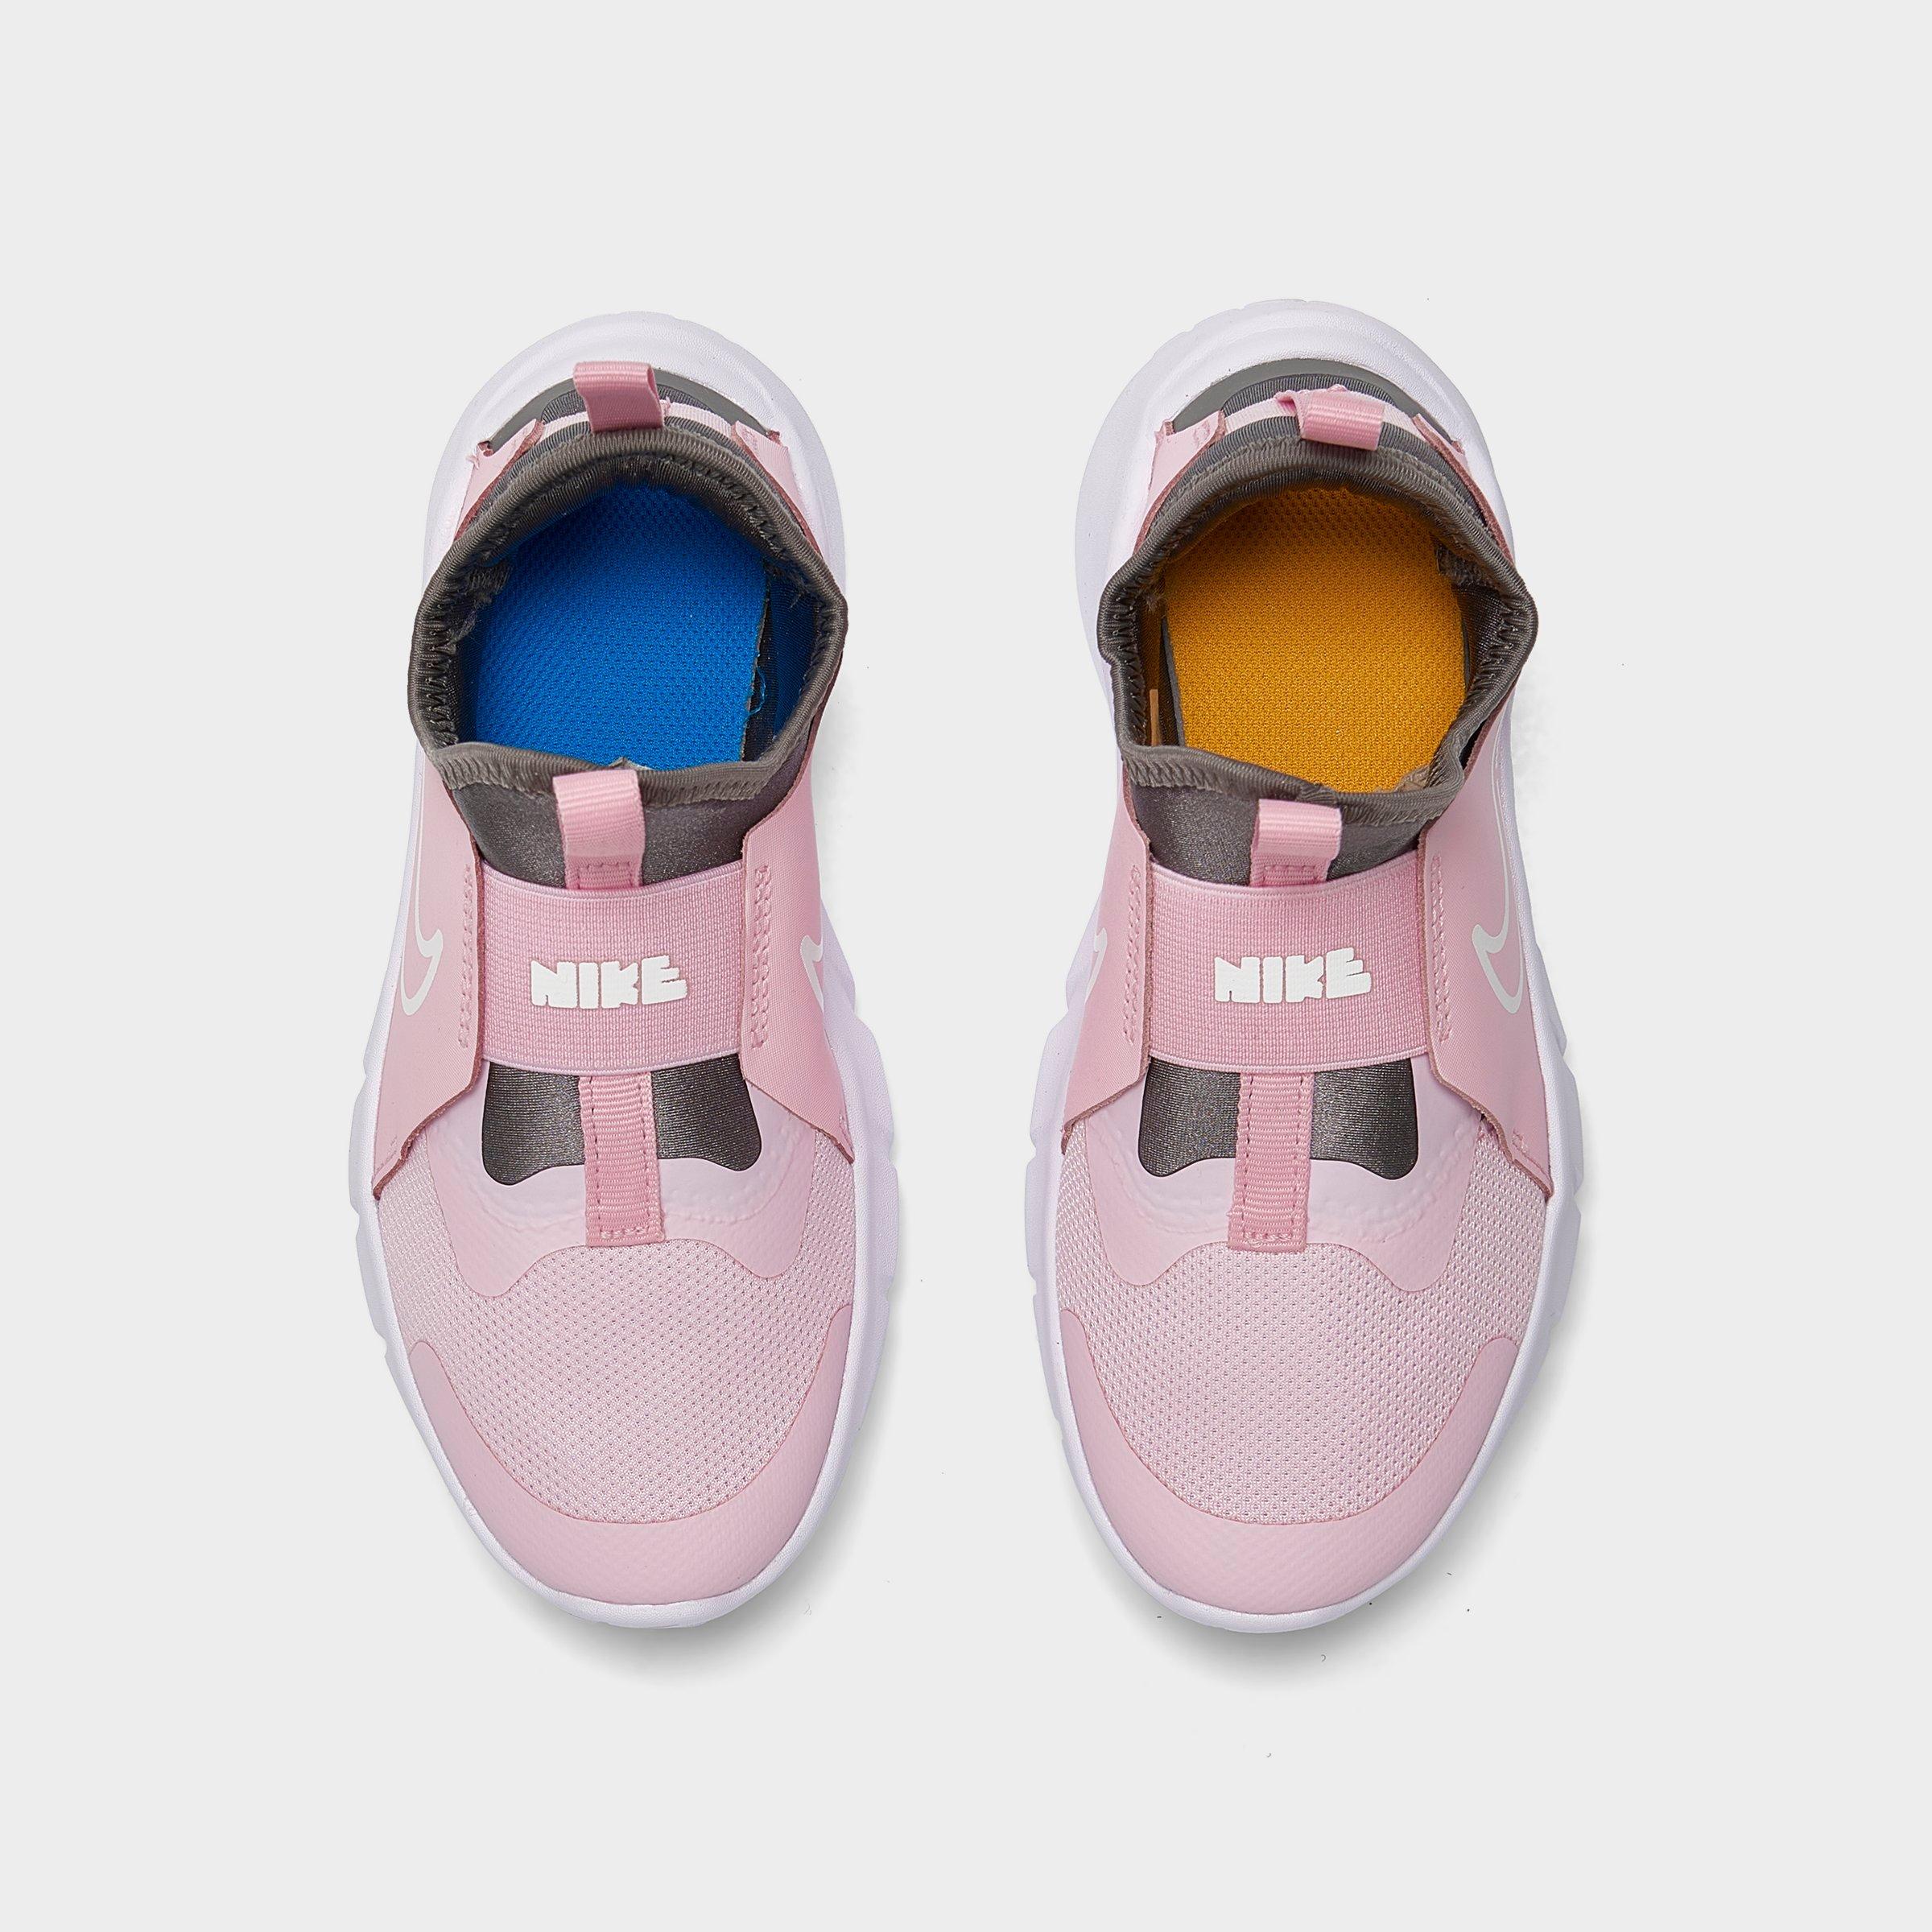 Nike Air Huarache Atomic Pink (Women's)